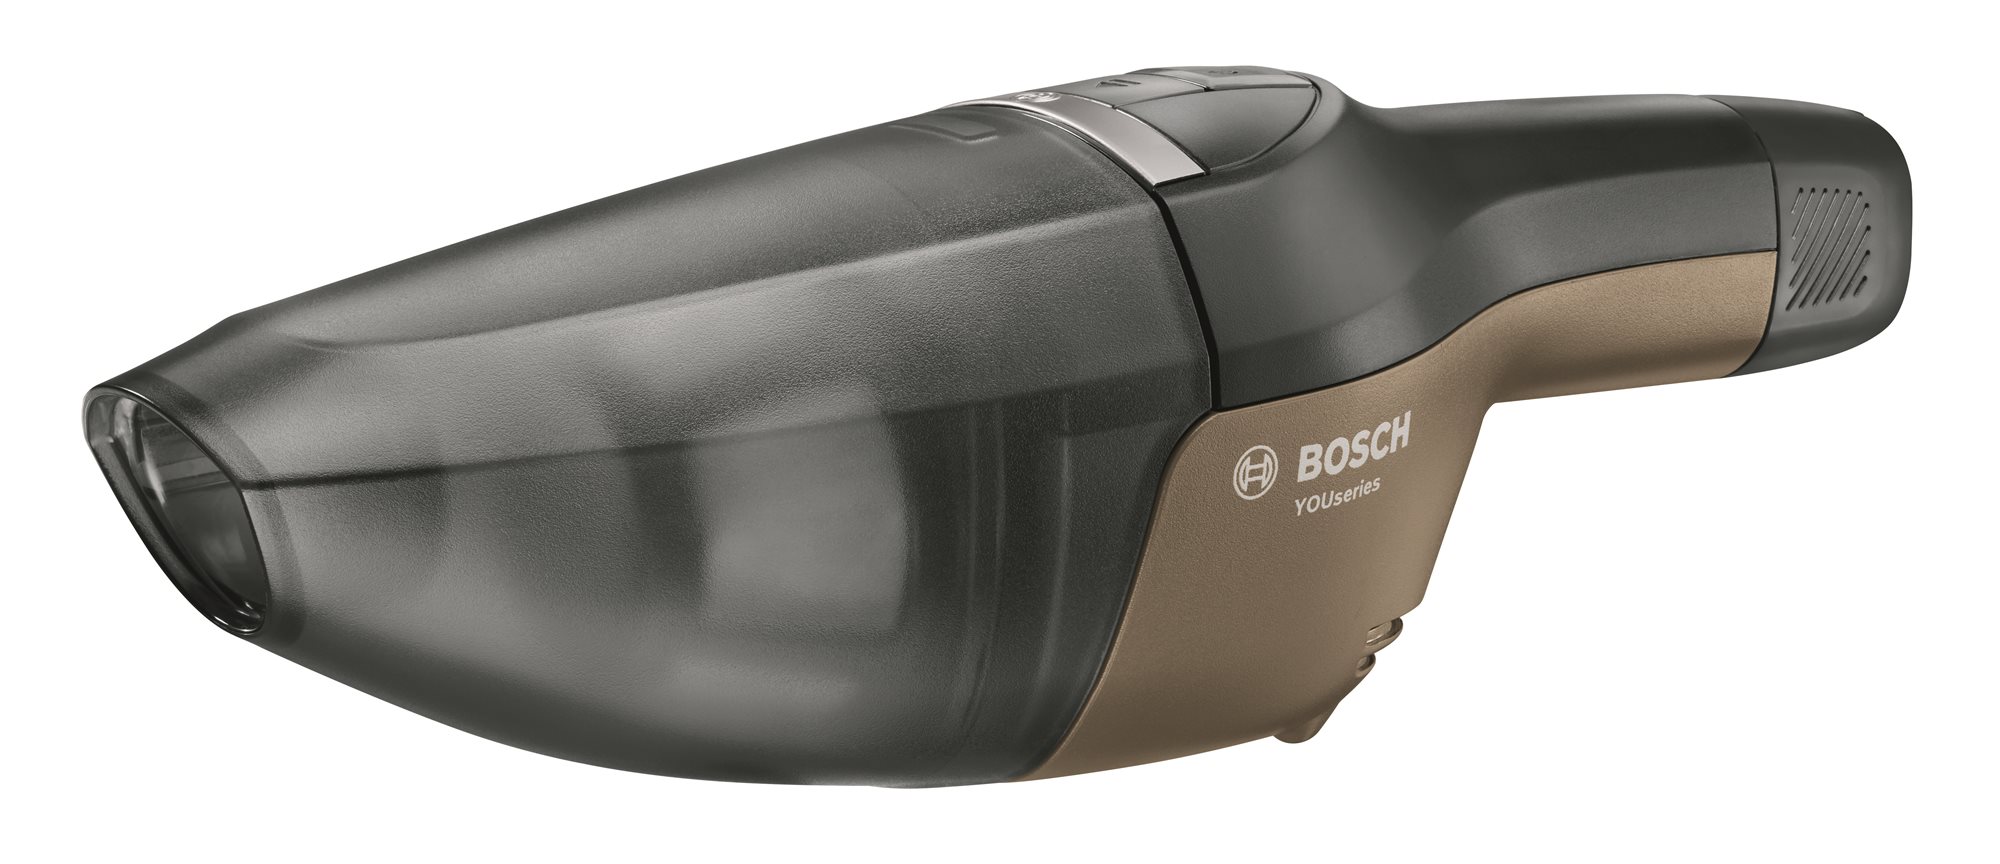 Többfunkciós porszívó Bosch YOUseries Vac